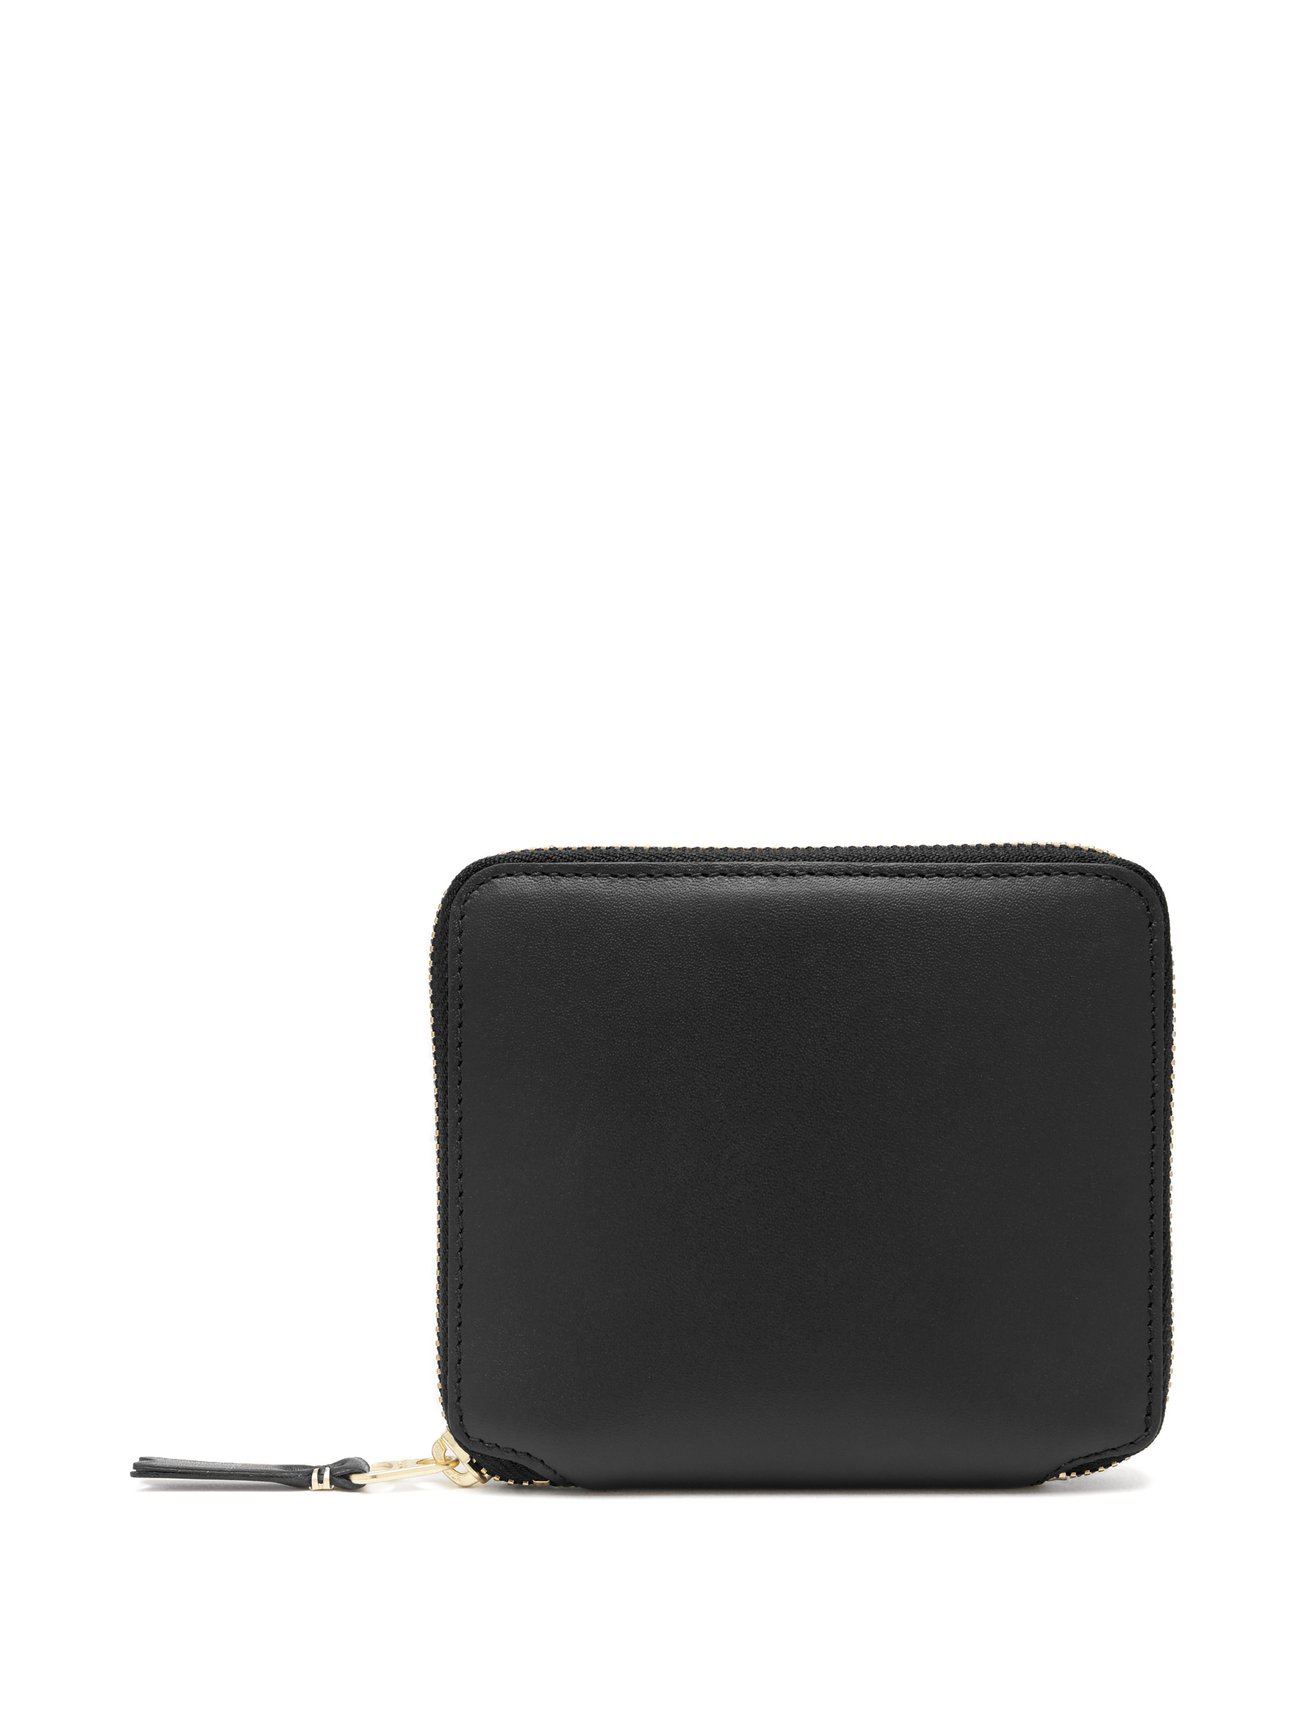 Comme des Garçons Wallet Black Zip-around leather wallet | 매치스 